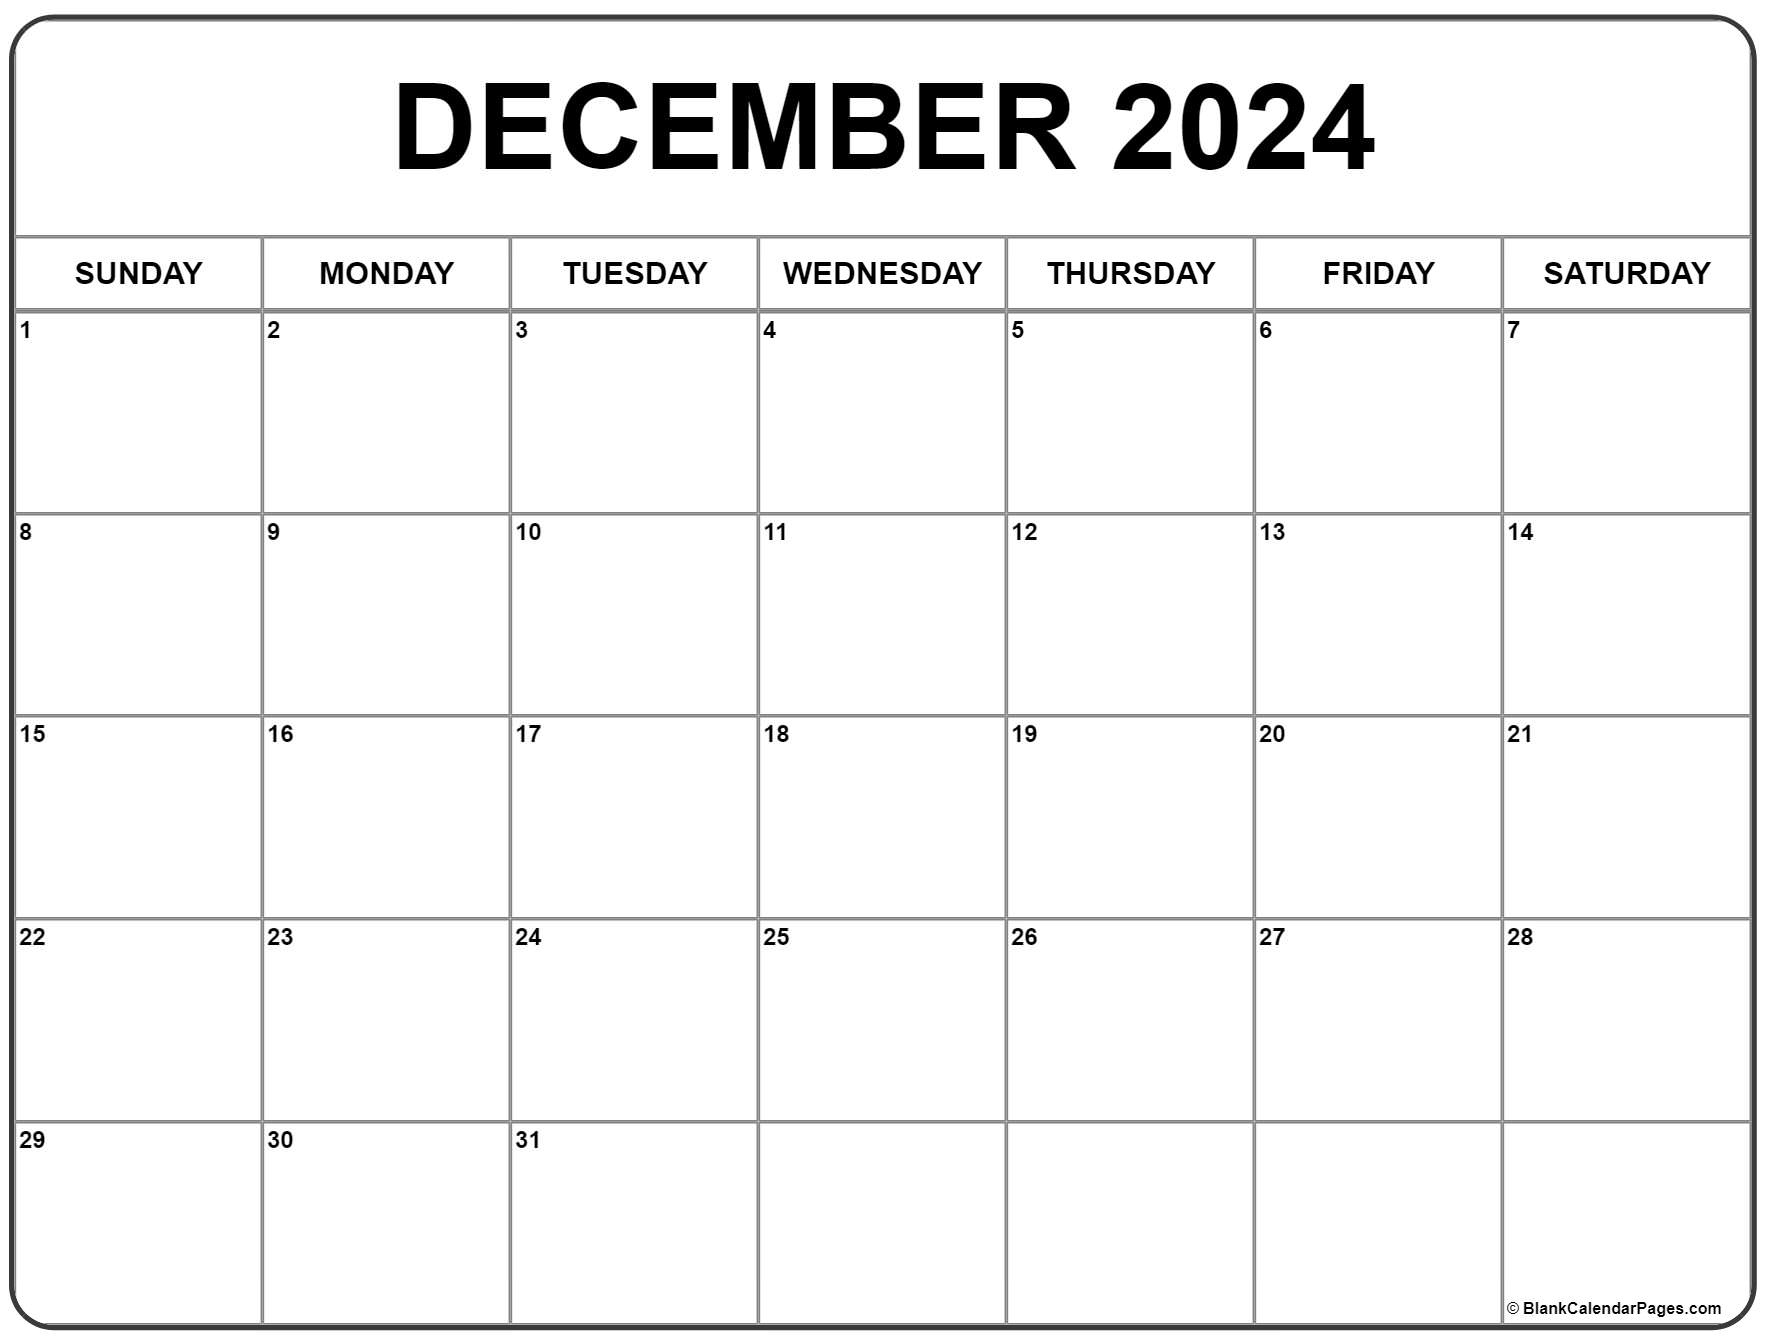 December 2024 Calendar | Free Printable Calendar | Printable Calendar Dec 2024